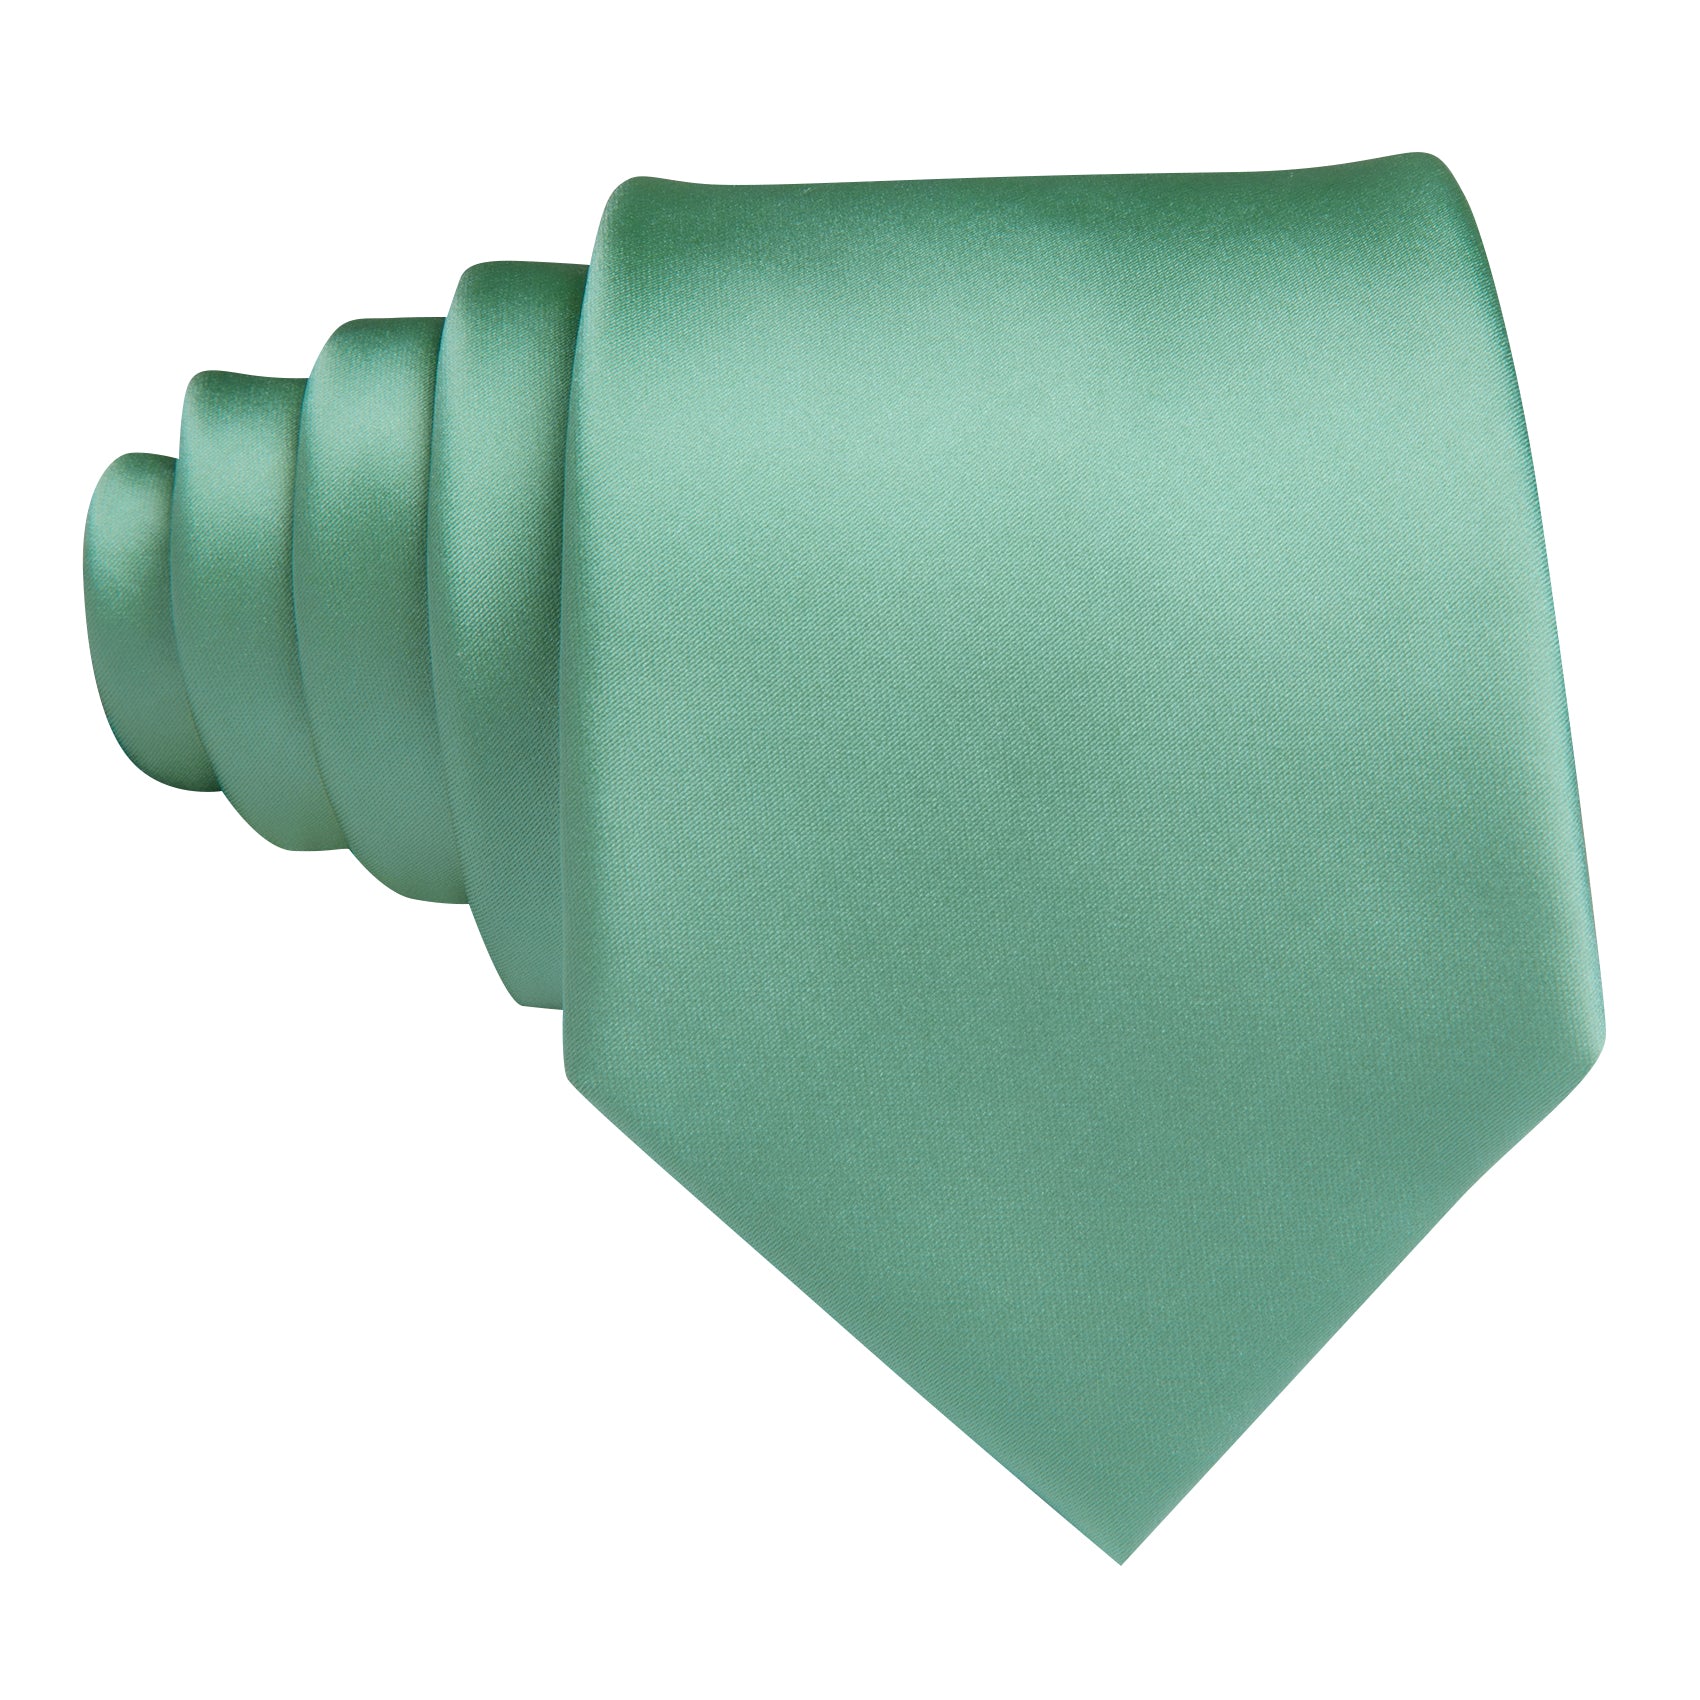 Turquoise Green Solid Silk Tie Handkerchief Cufflinks Set